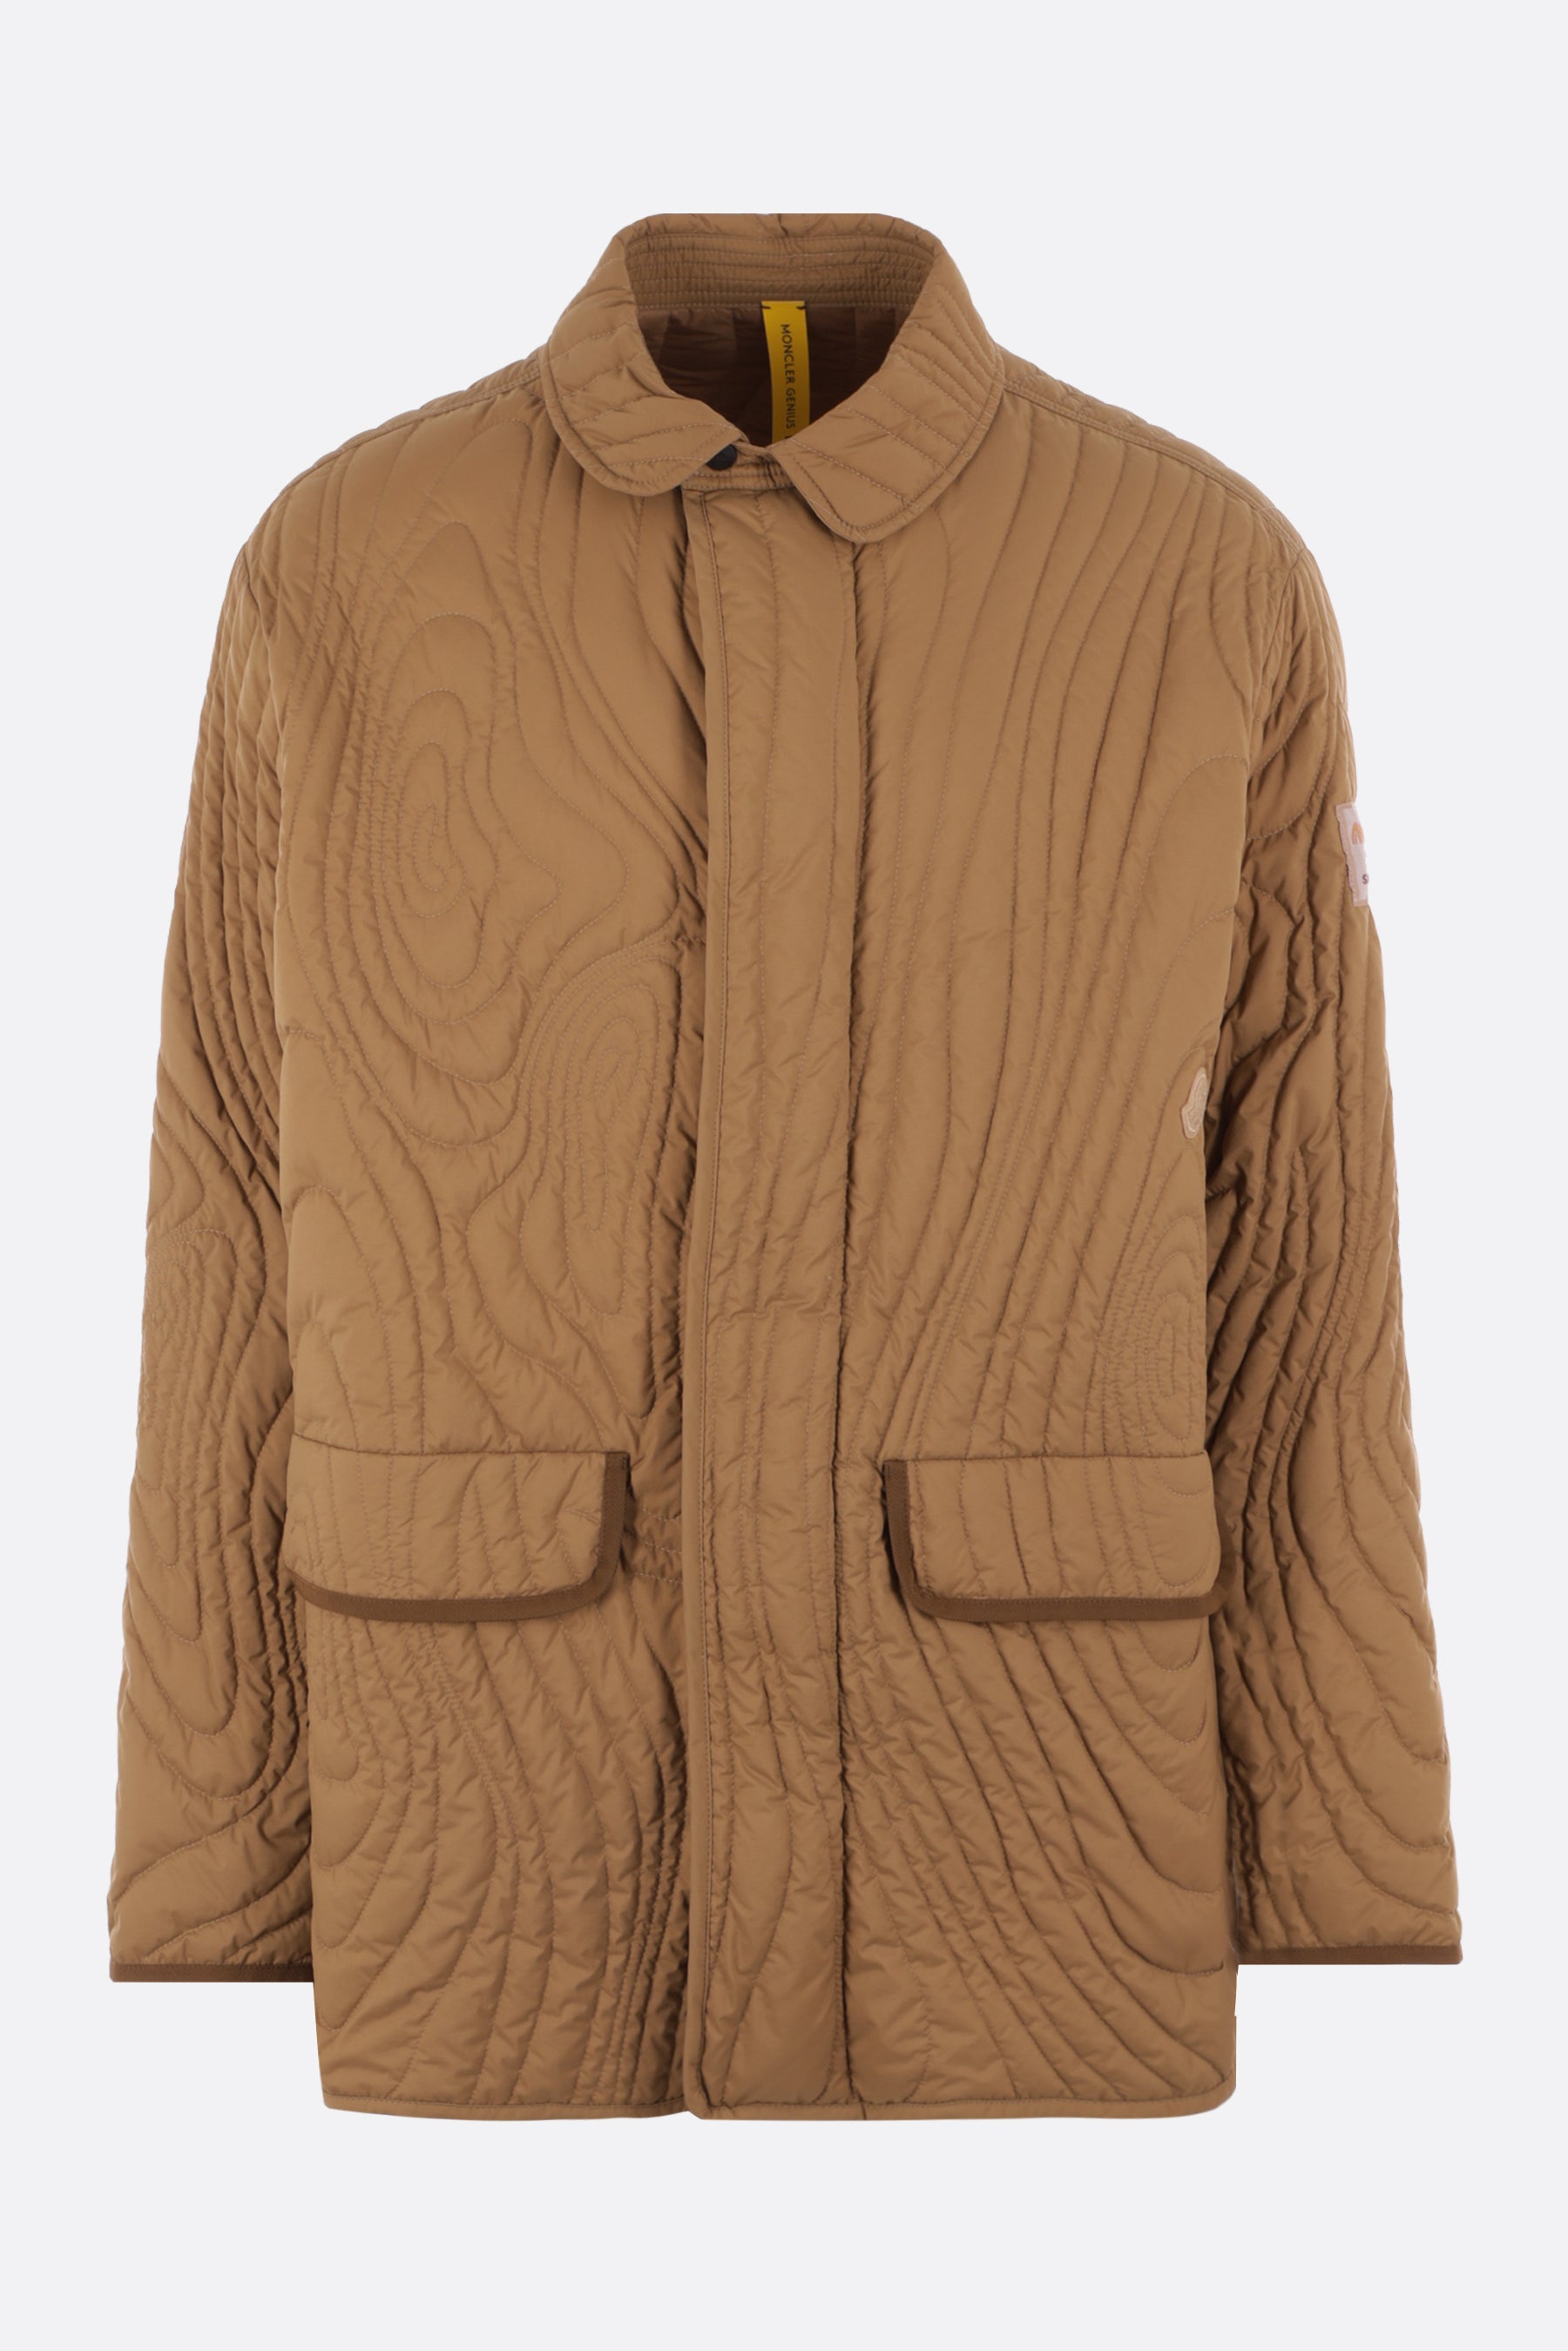 Harter-Heighway ultra-light nylon down jacket